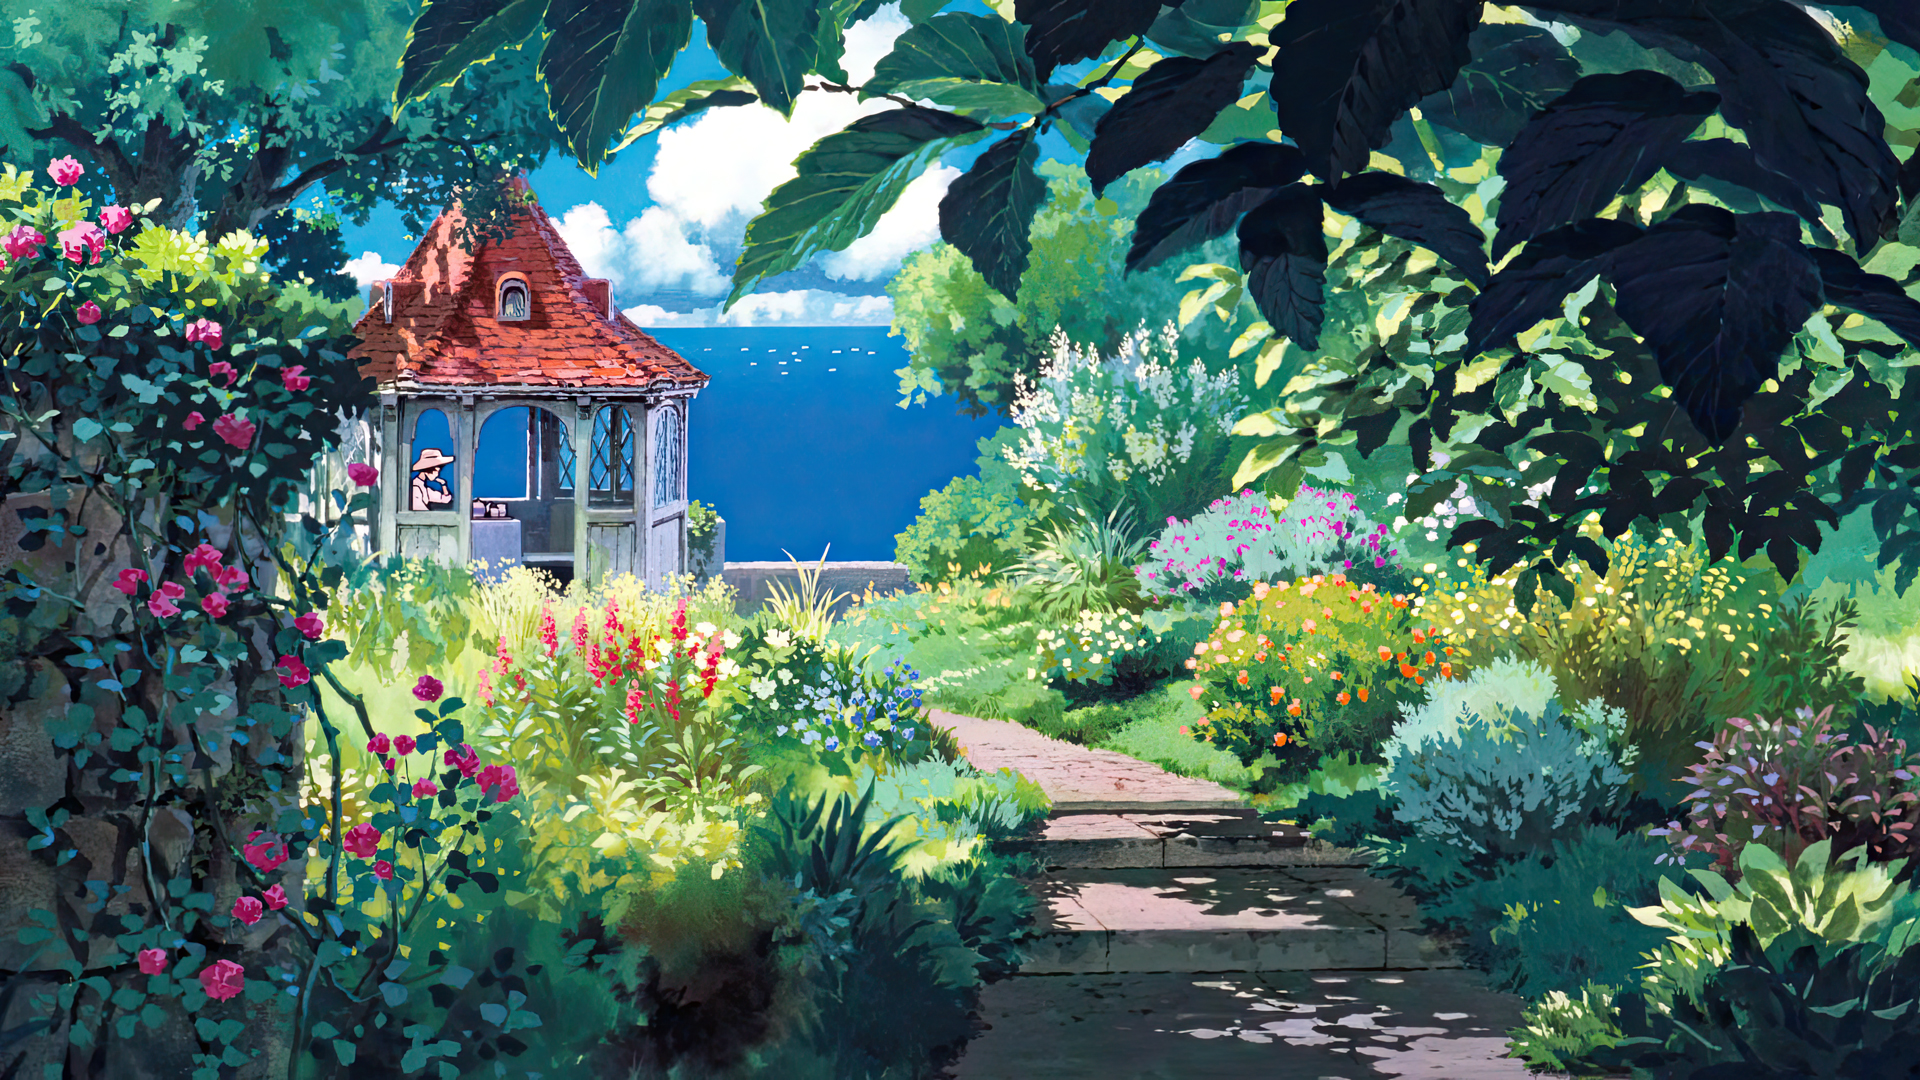 Anime 1920x1080 Porco Rosso Kurenai no Buta Studio Ghibli animated movies film stills anime animation Hayao Miyazaki garden water sky clouds flowers leaves gazebo dappled sunlight